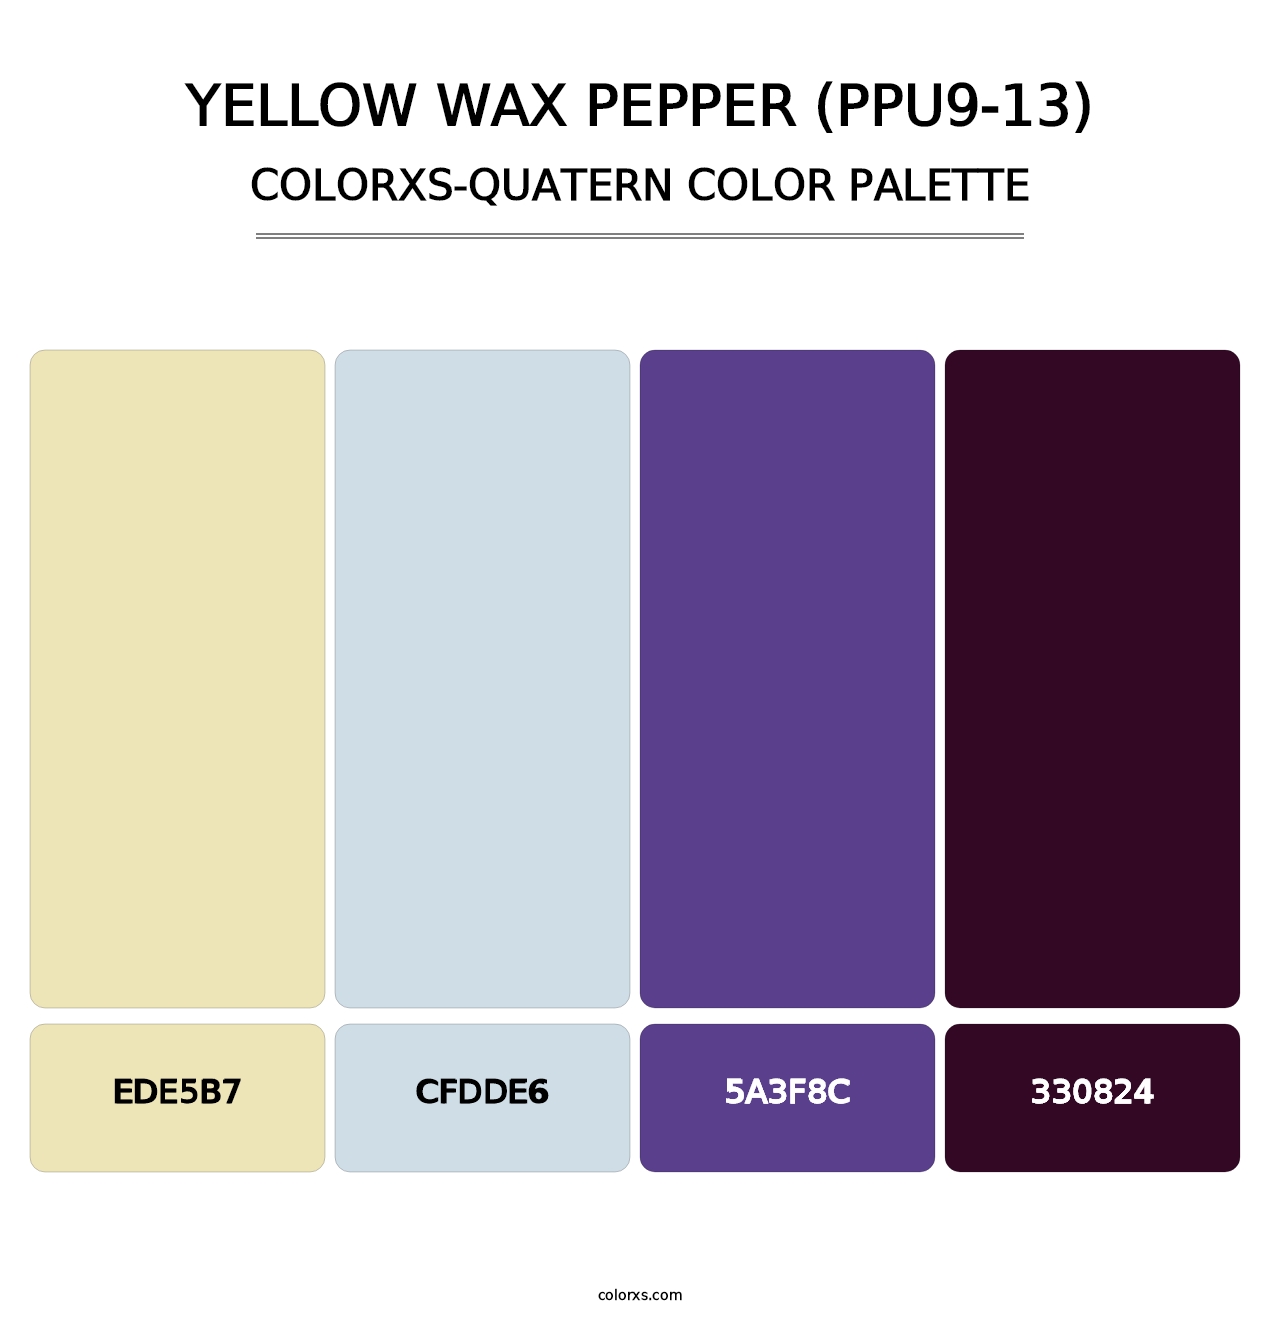 Yellow Wax Pepper (PPU9-13) - Colorxs Quatern Palette